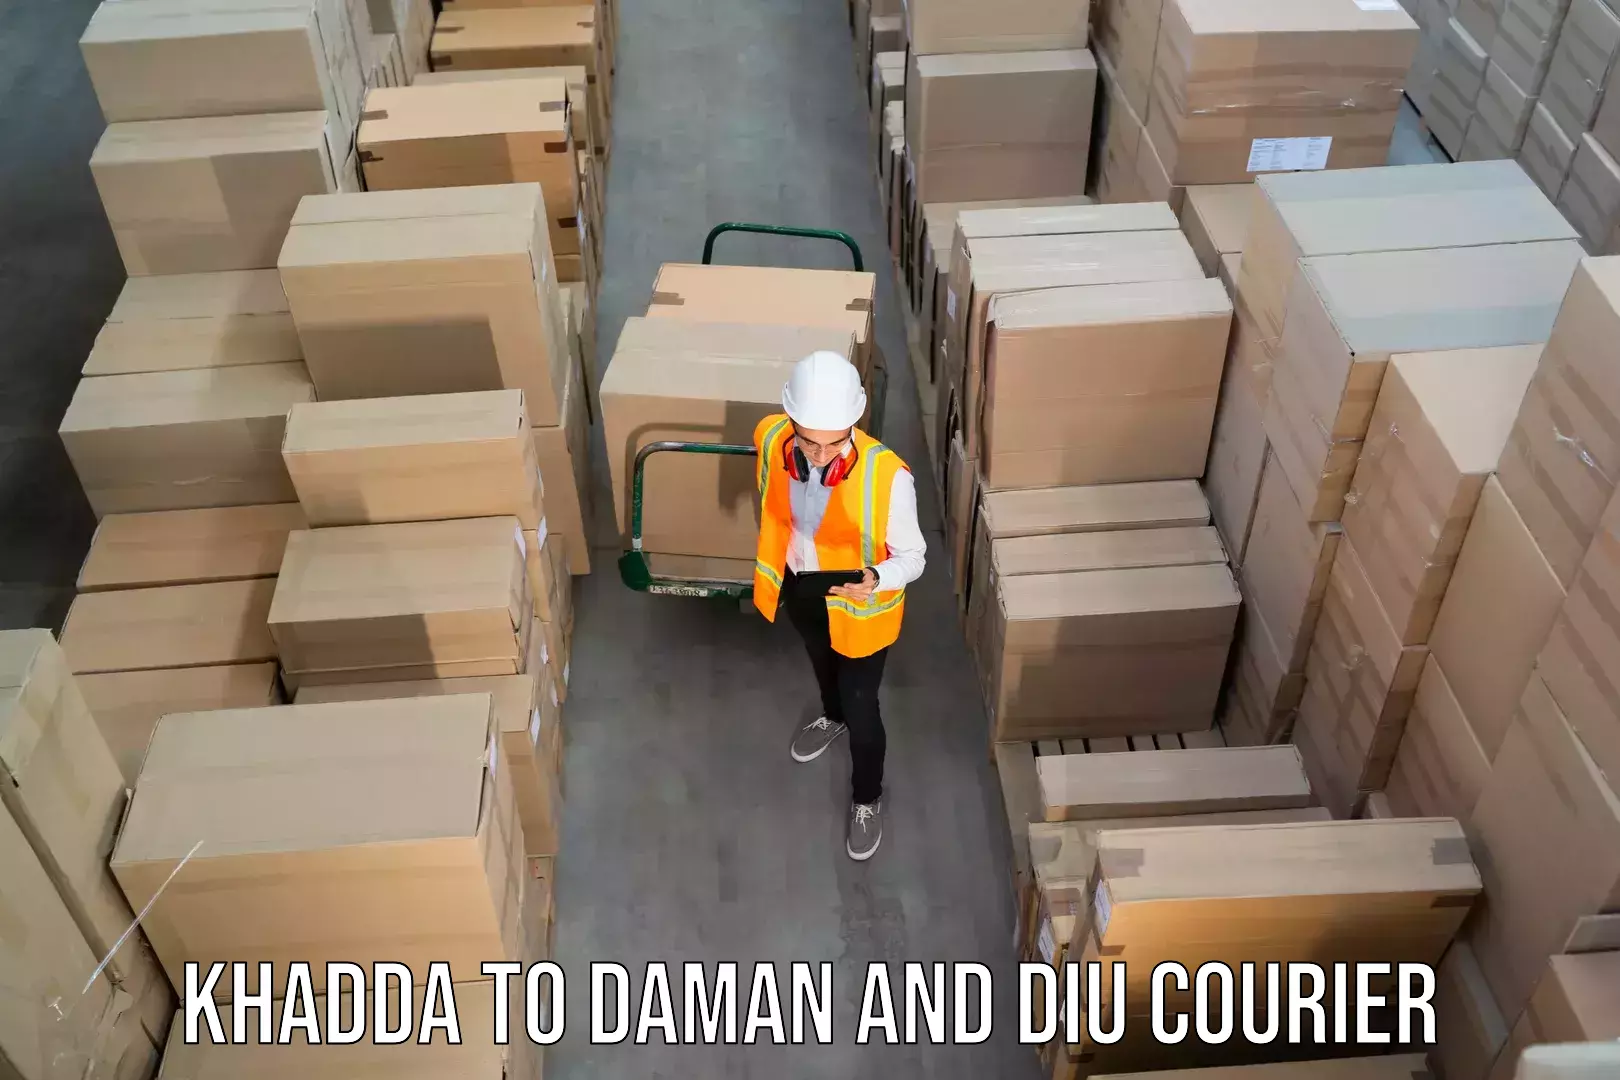 Nationwide delivery network Khadda to Daman and Diu